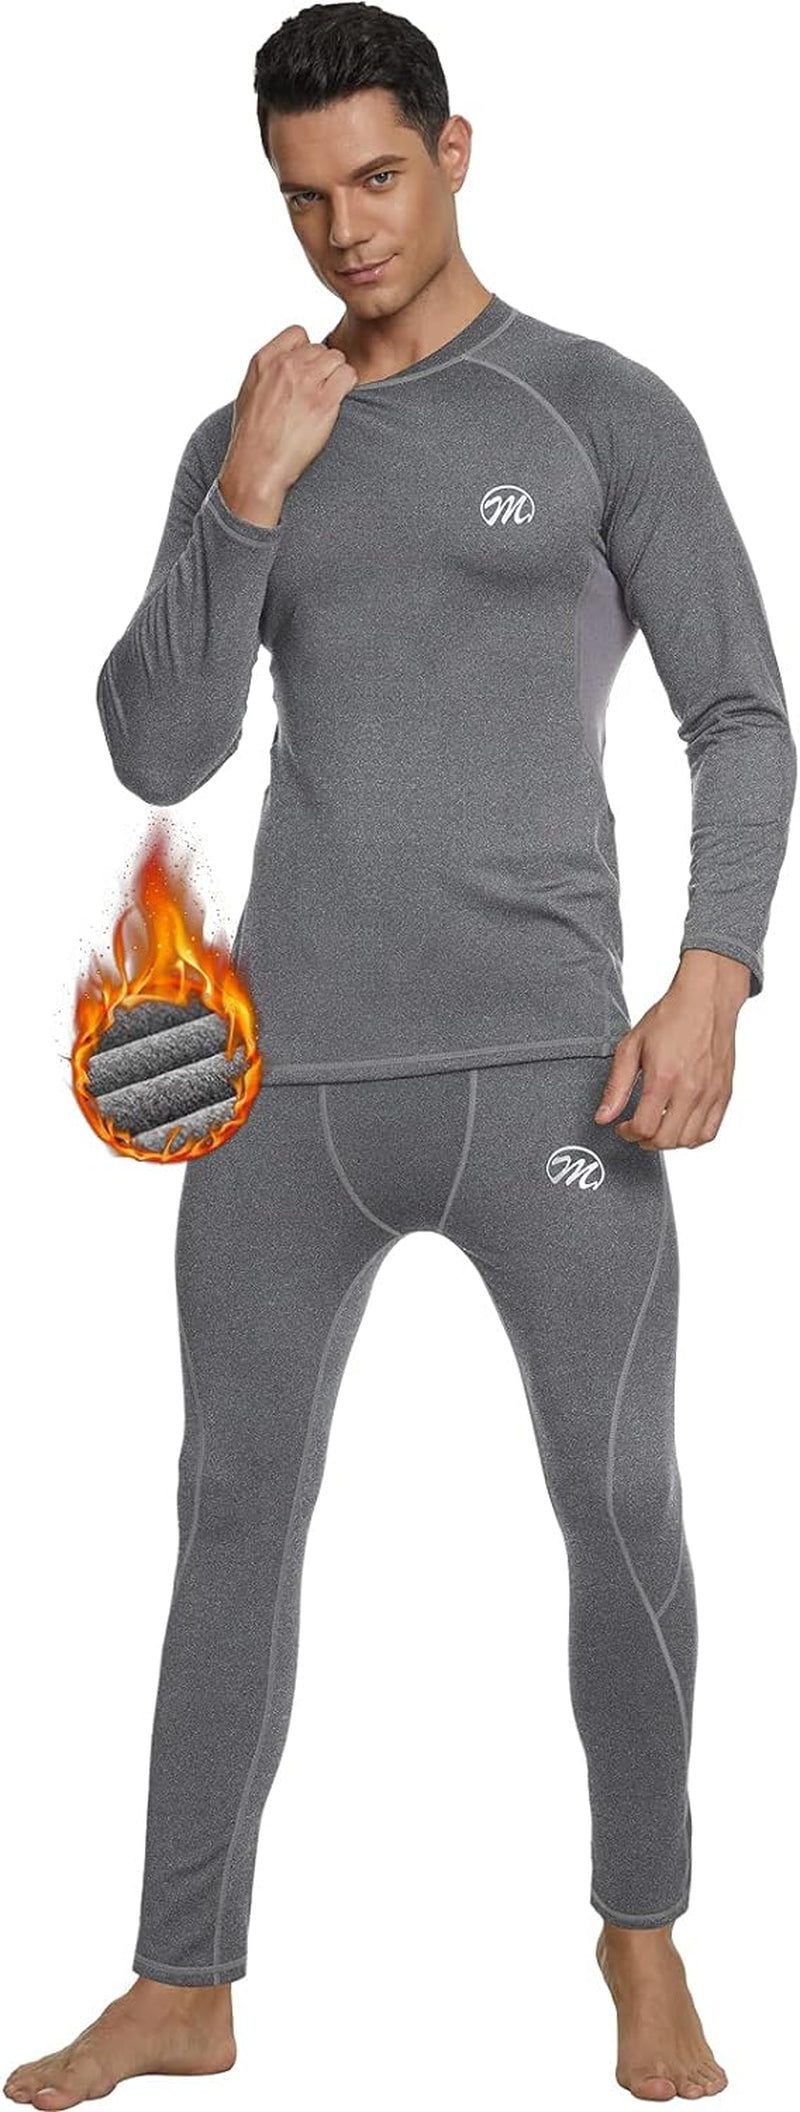 Thermal Underwear legging for Men, Ski Cold Weather Gear for Heat Retention